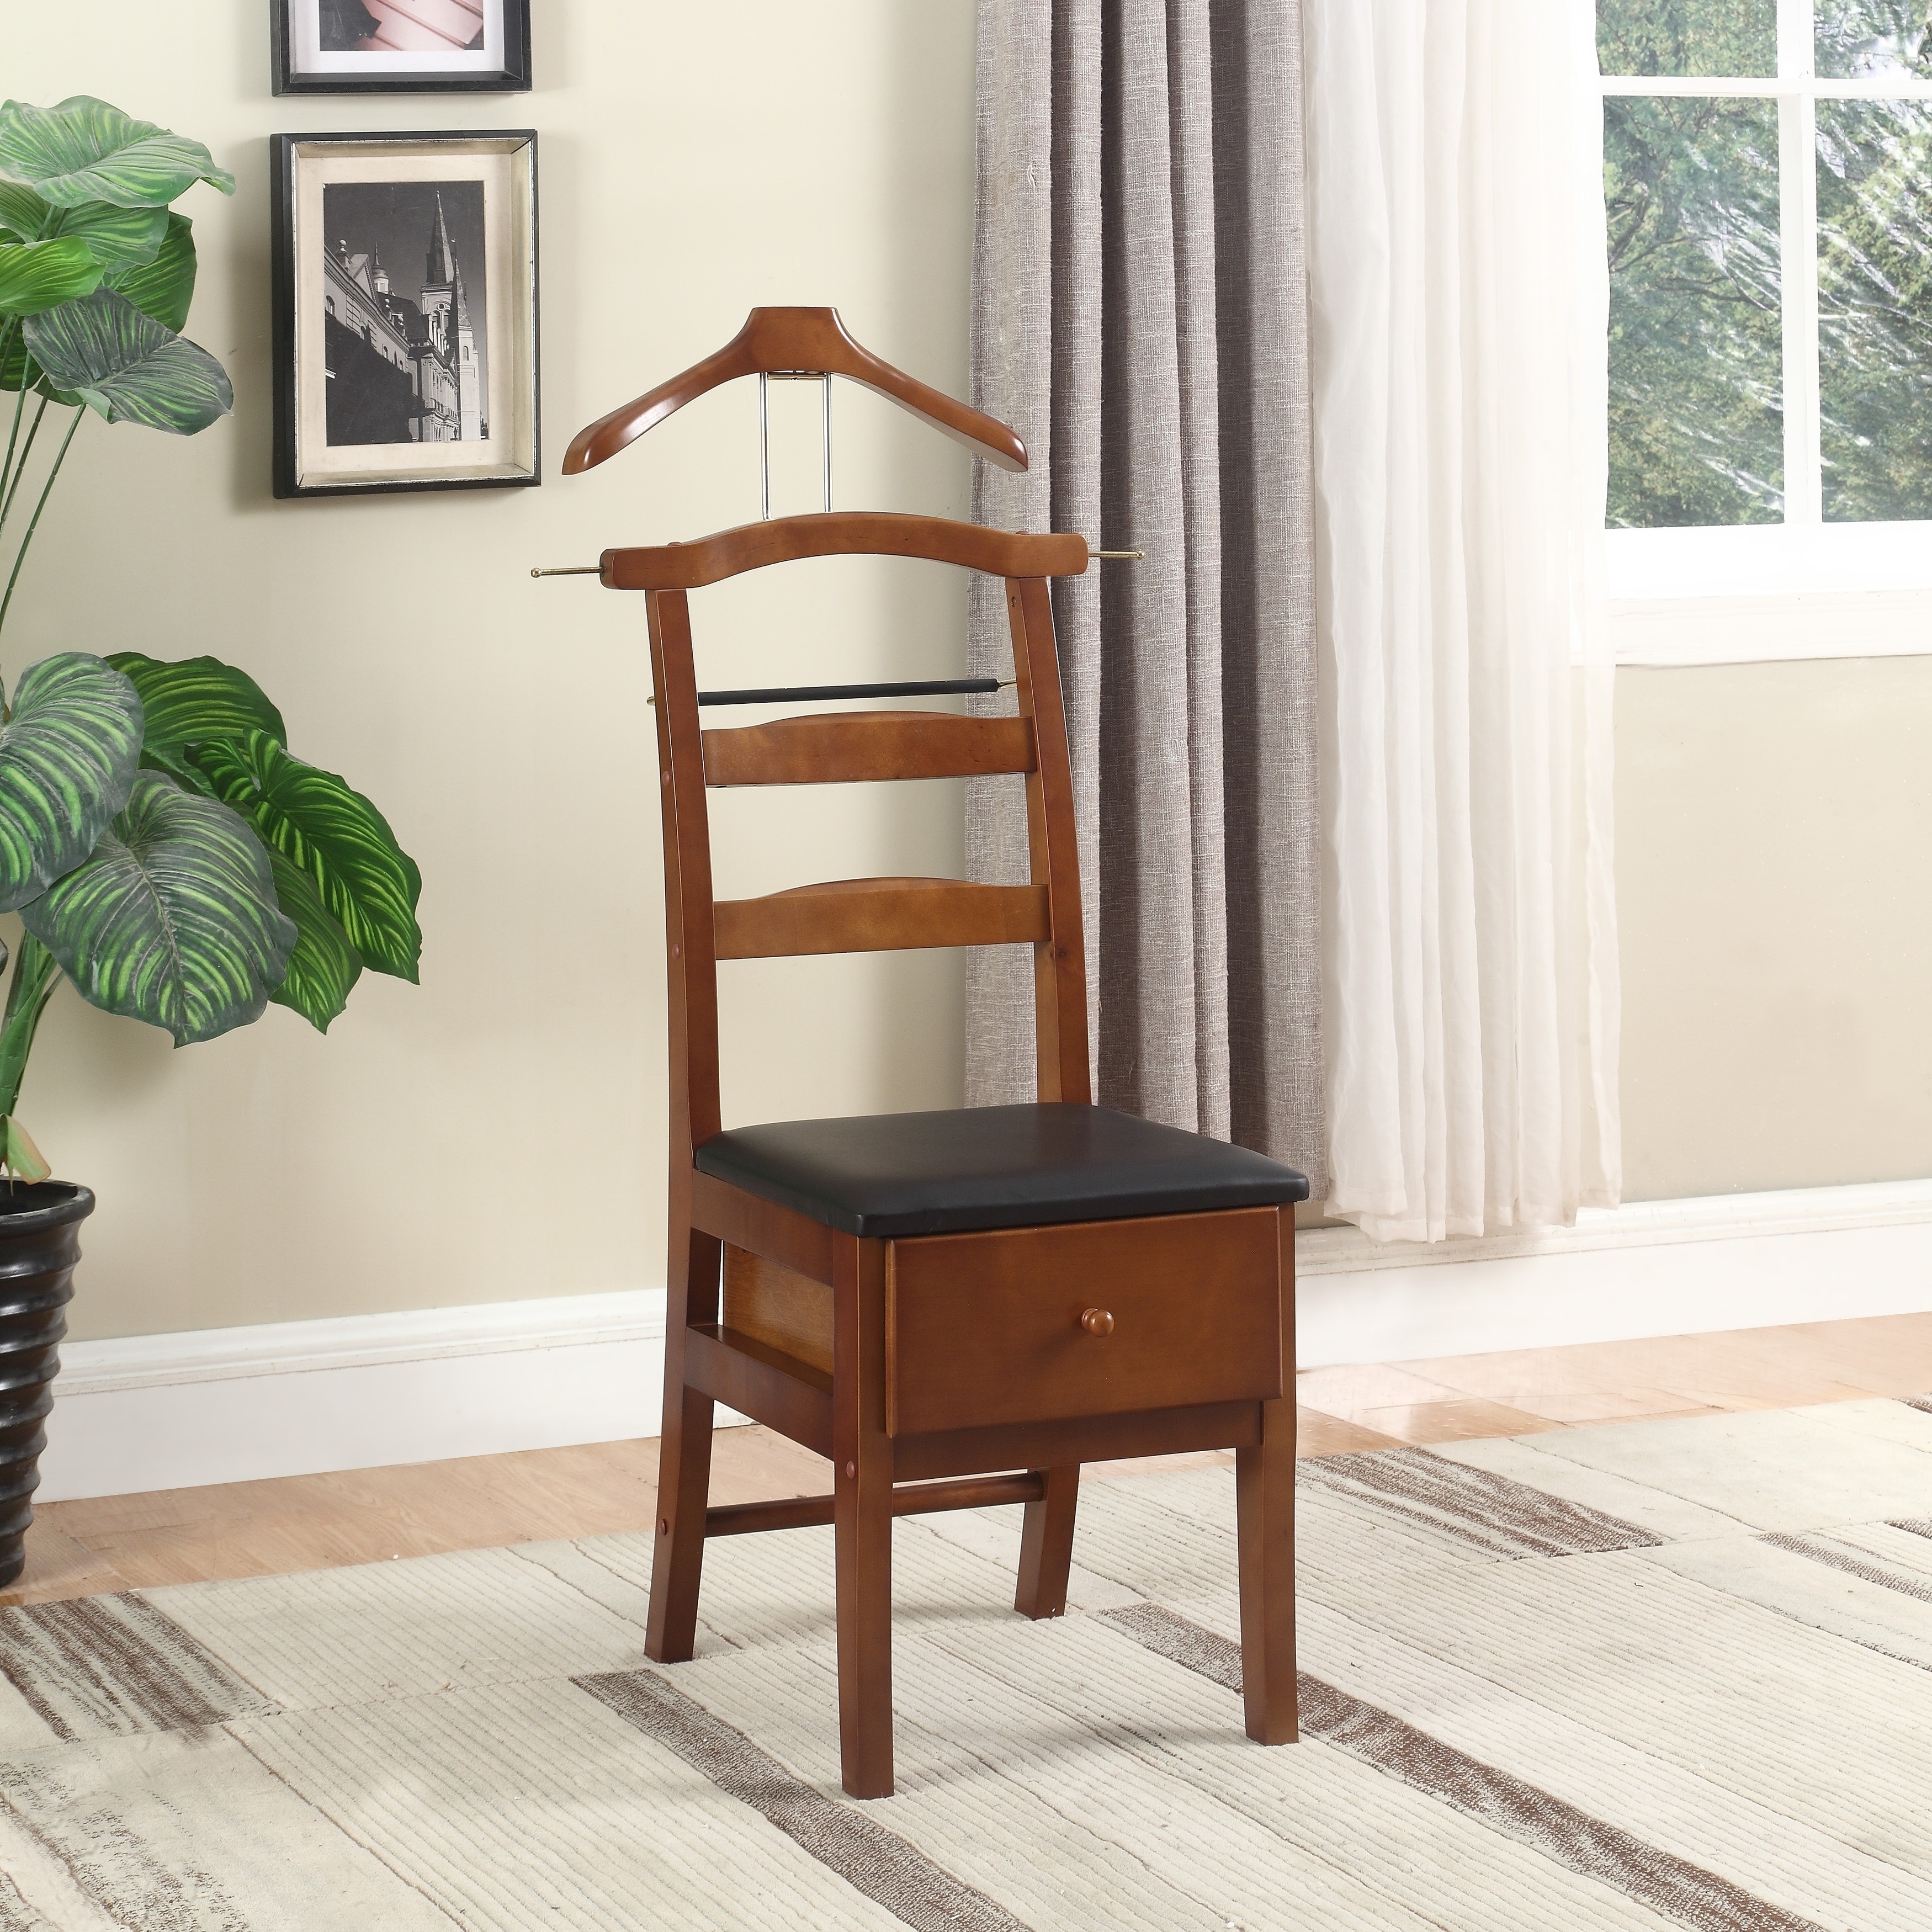 Shop Executive Light Walnut Valet Chair On Sale Overstock 5084814